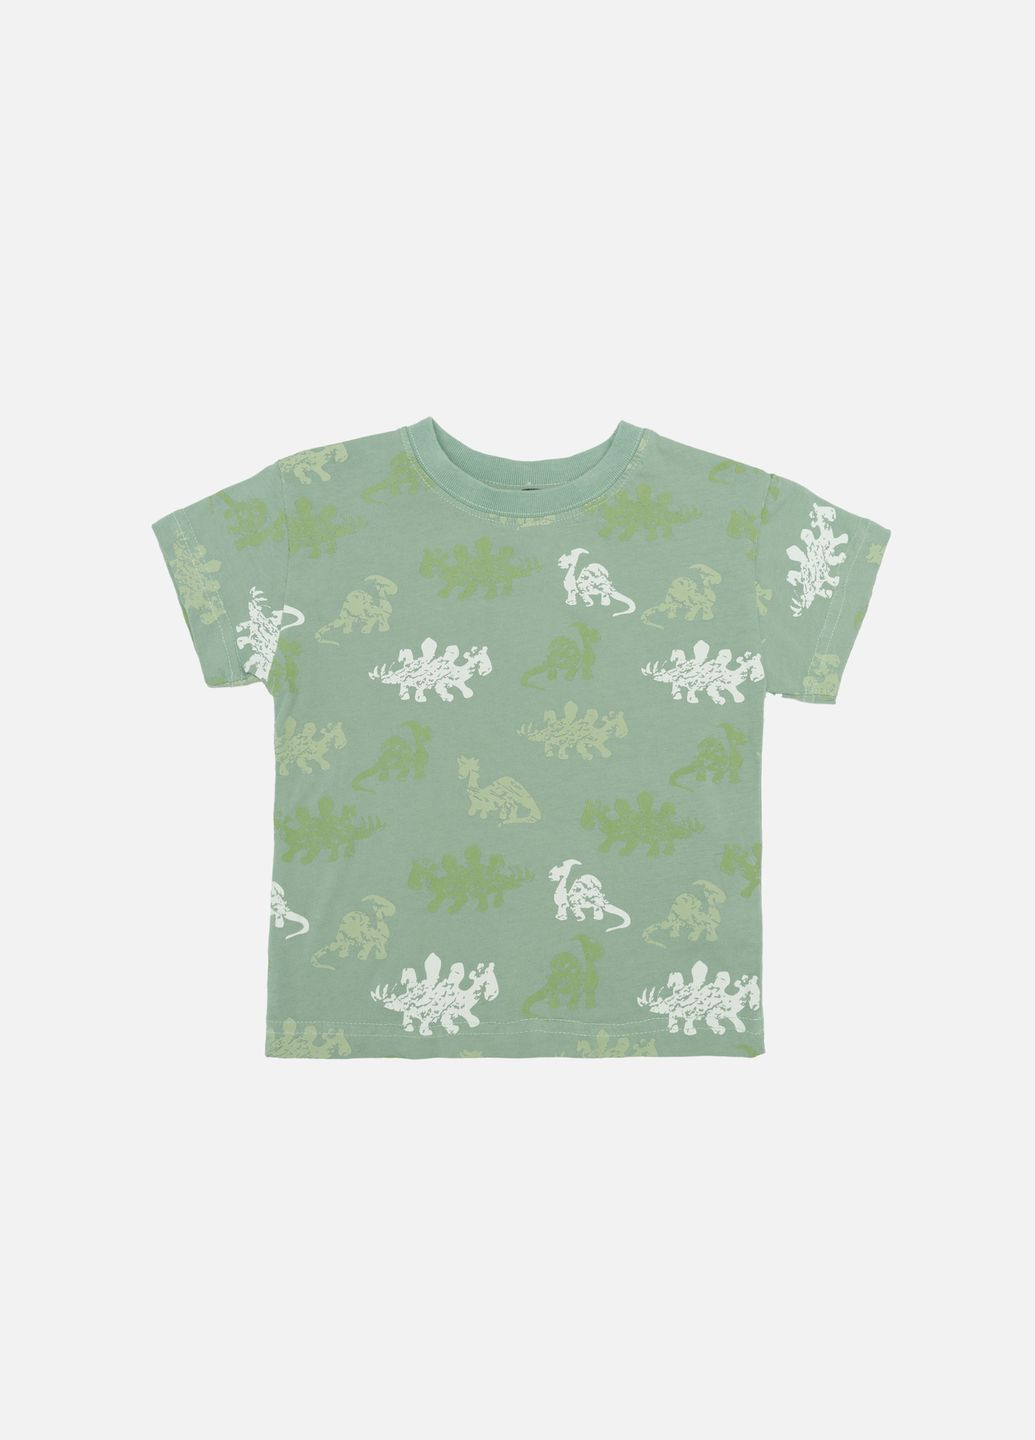 Оливковая летняя футболка с коротким рукавом для мальчика цвет оливковый цб-00246543 First Kids